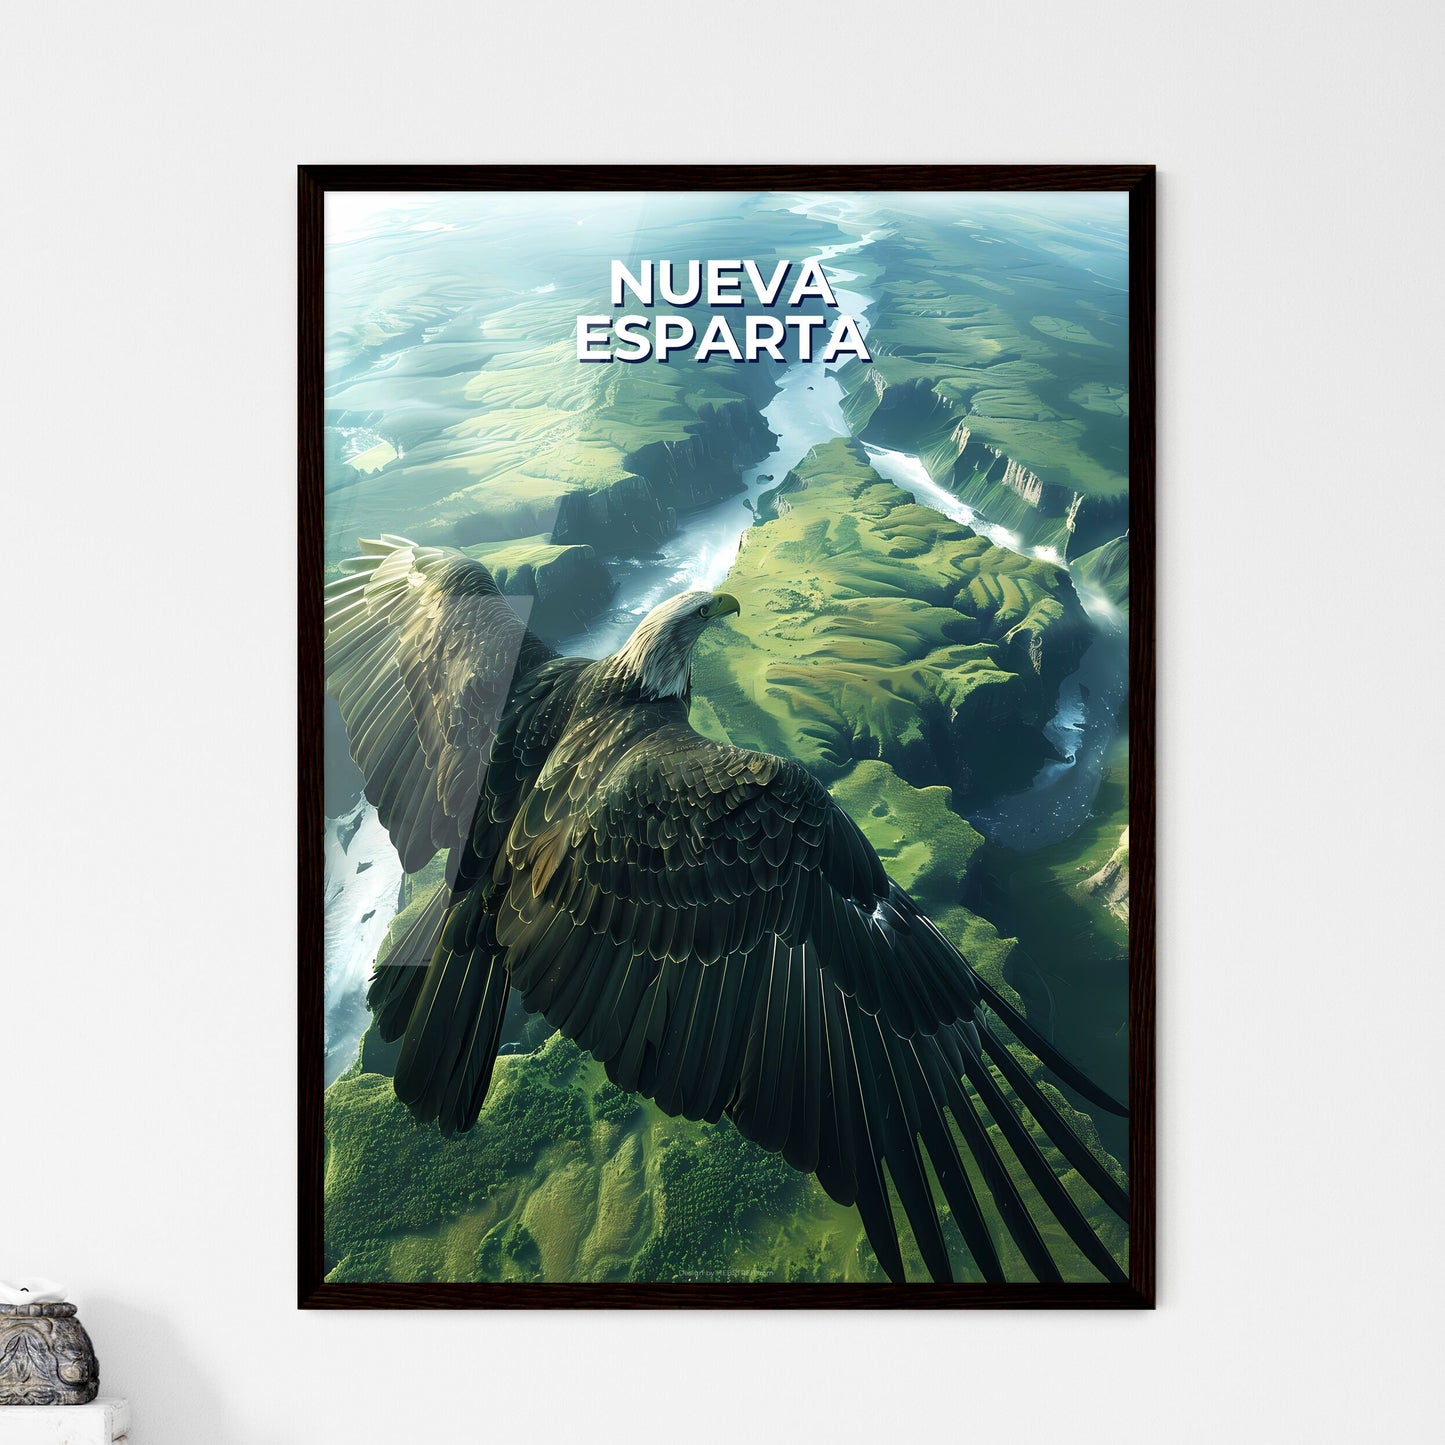 Venezuelan Landscape, Nueva Esparta, Bird, River, Nature, Painting, Art